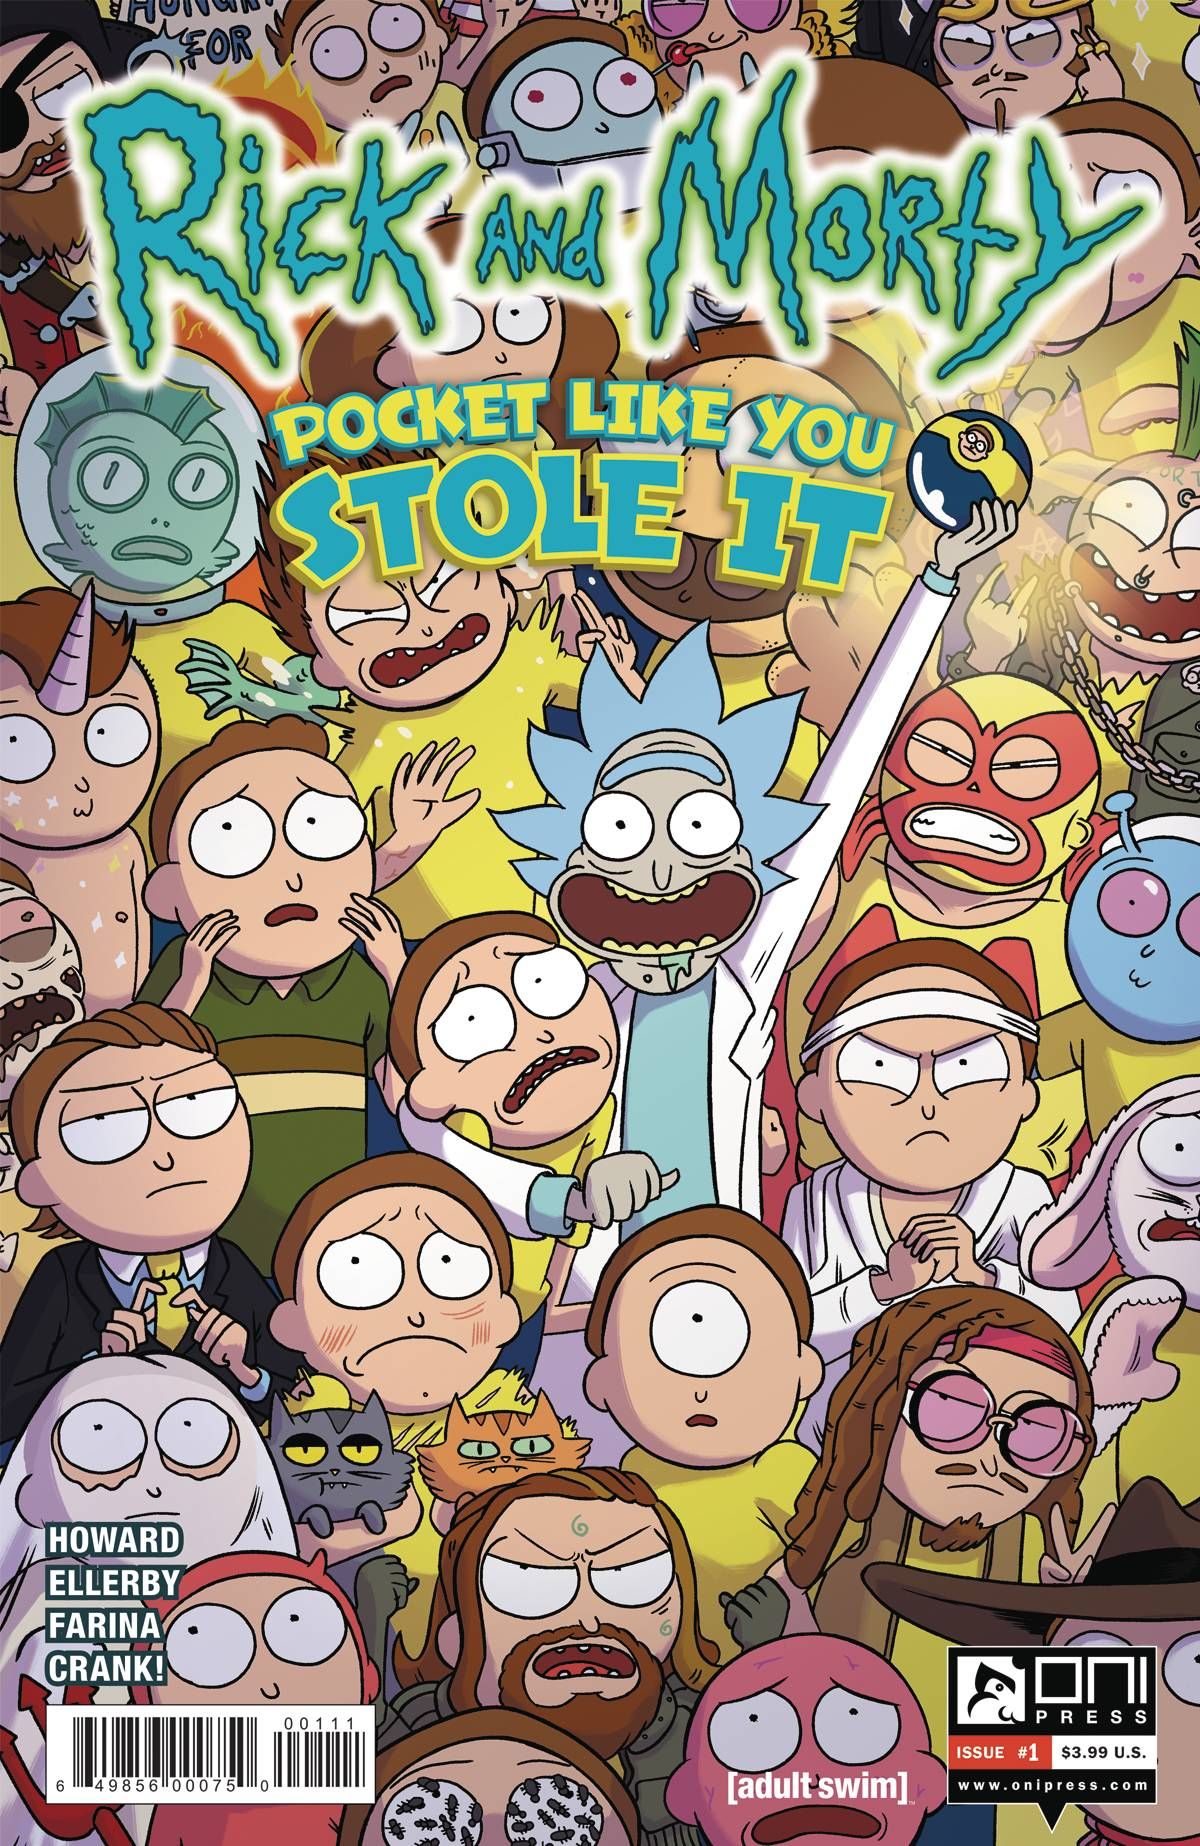 Rick and Morty: Pocket Like You Stole It #1 Comic